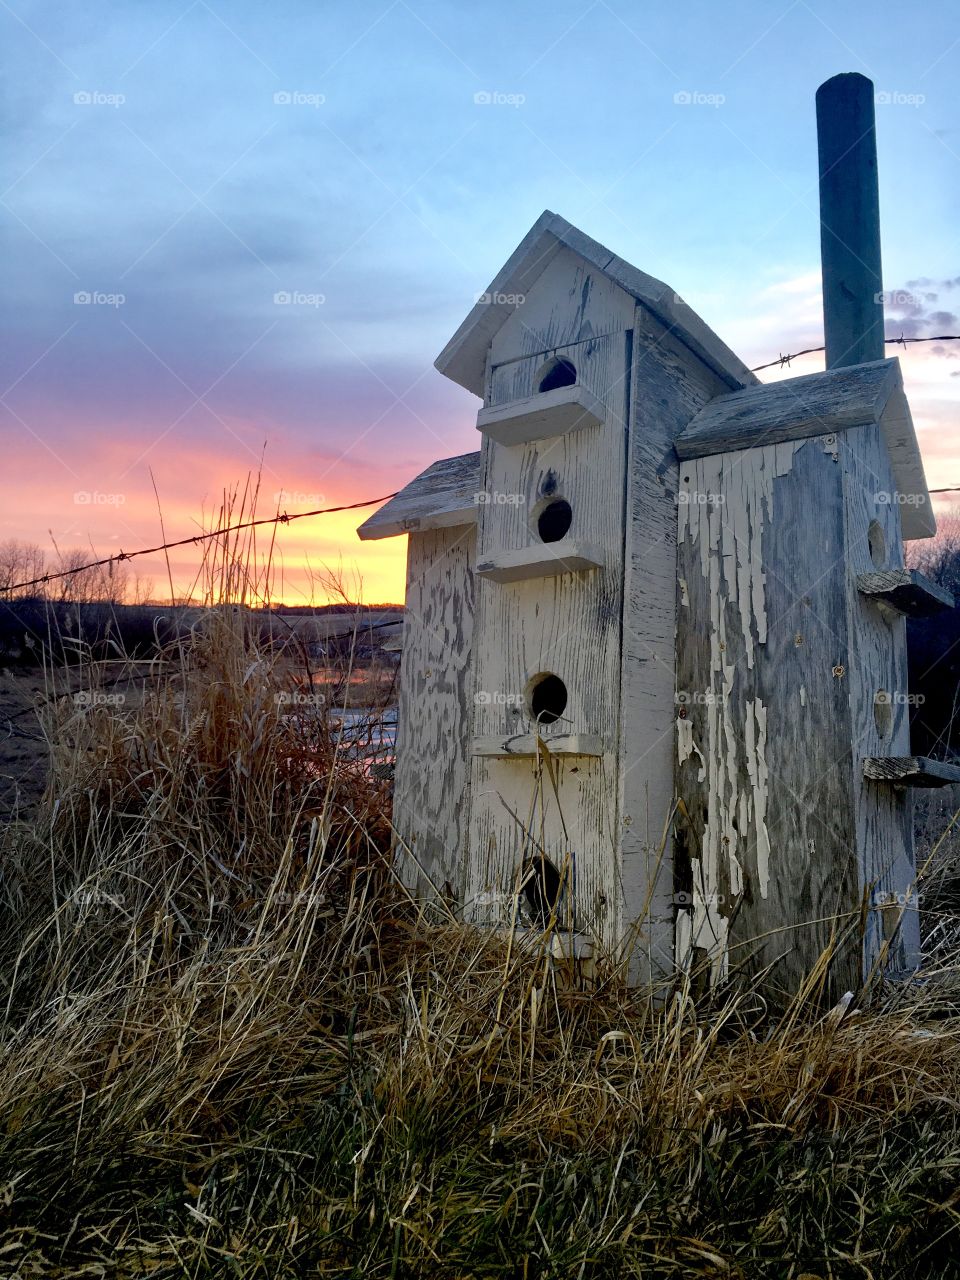 Old birdhouse in the farm